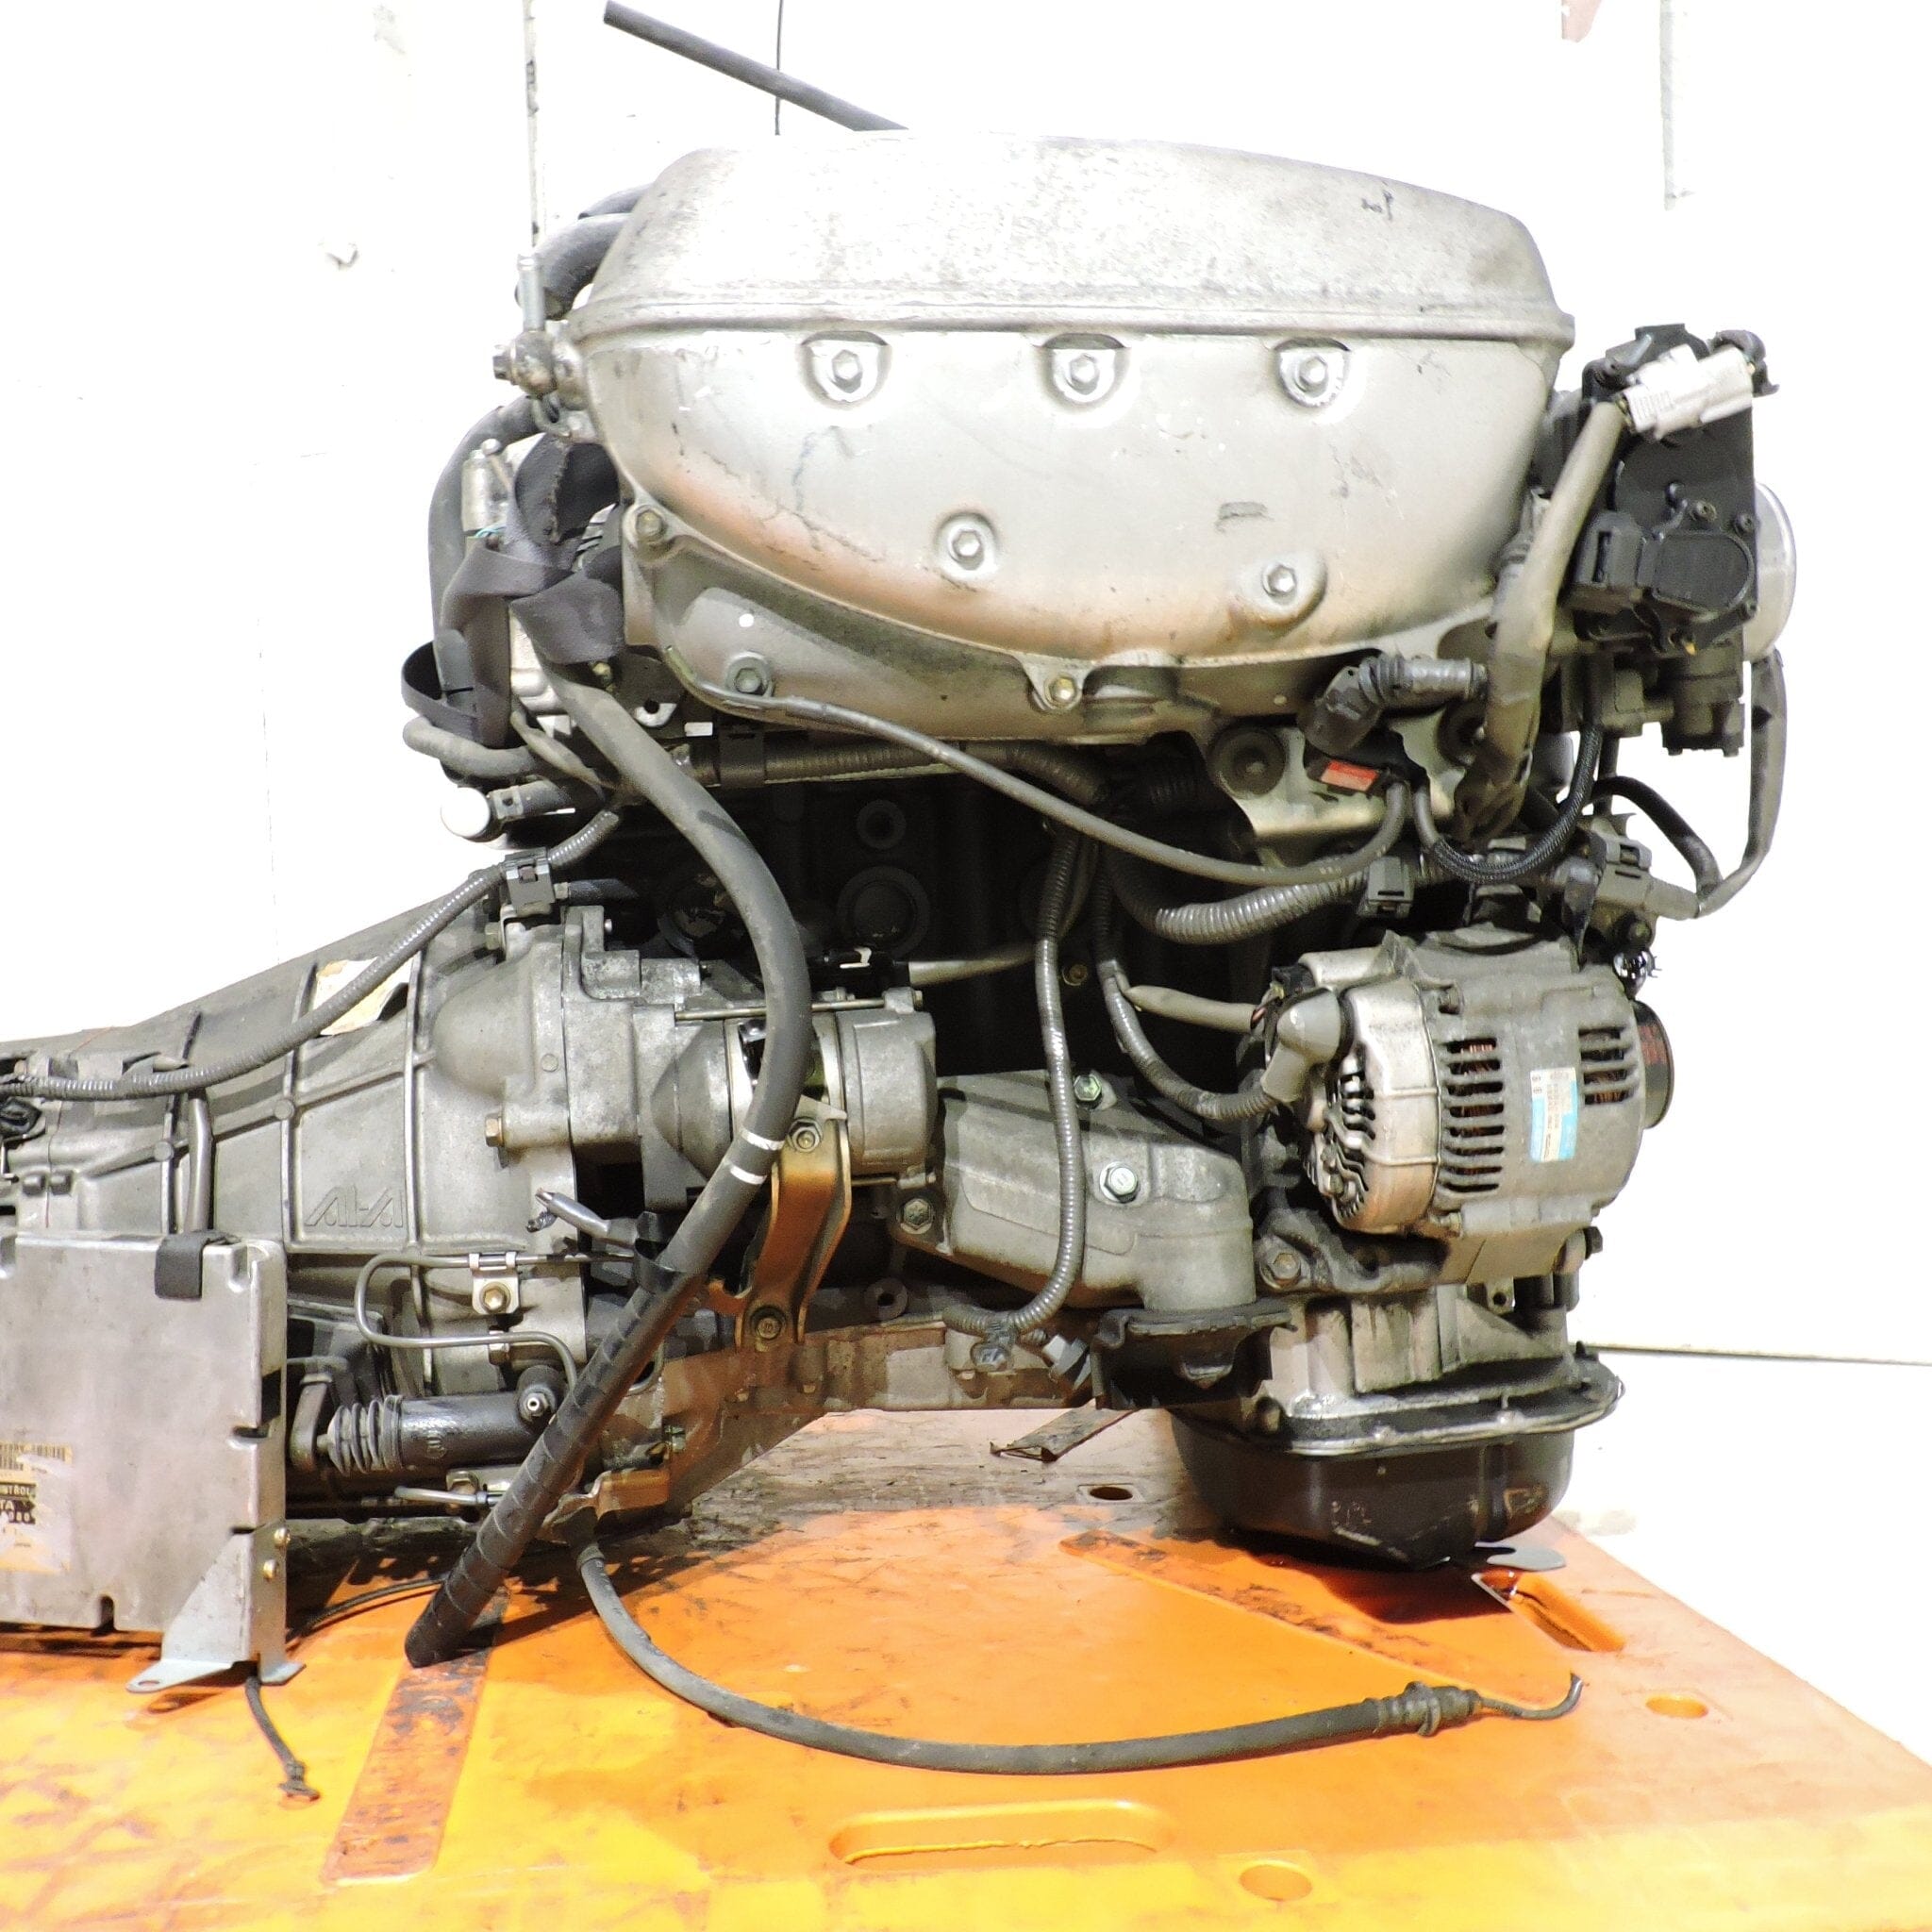 Toyota 2.0L Dual Vvti Rwd Complete JDM Engine 6 Speed Manual Transmission Swap - 3S-GE Beams